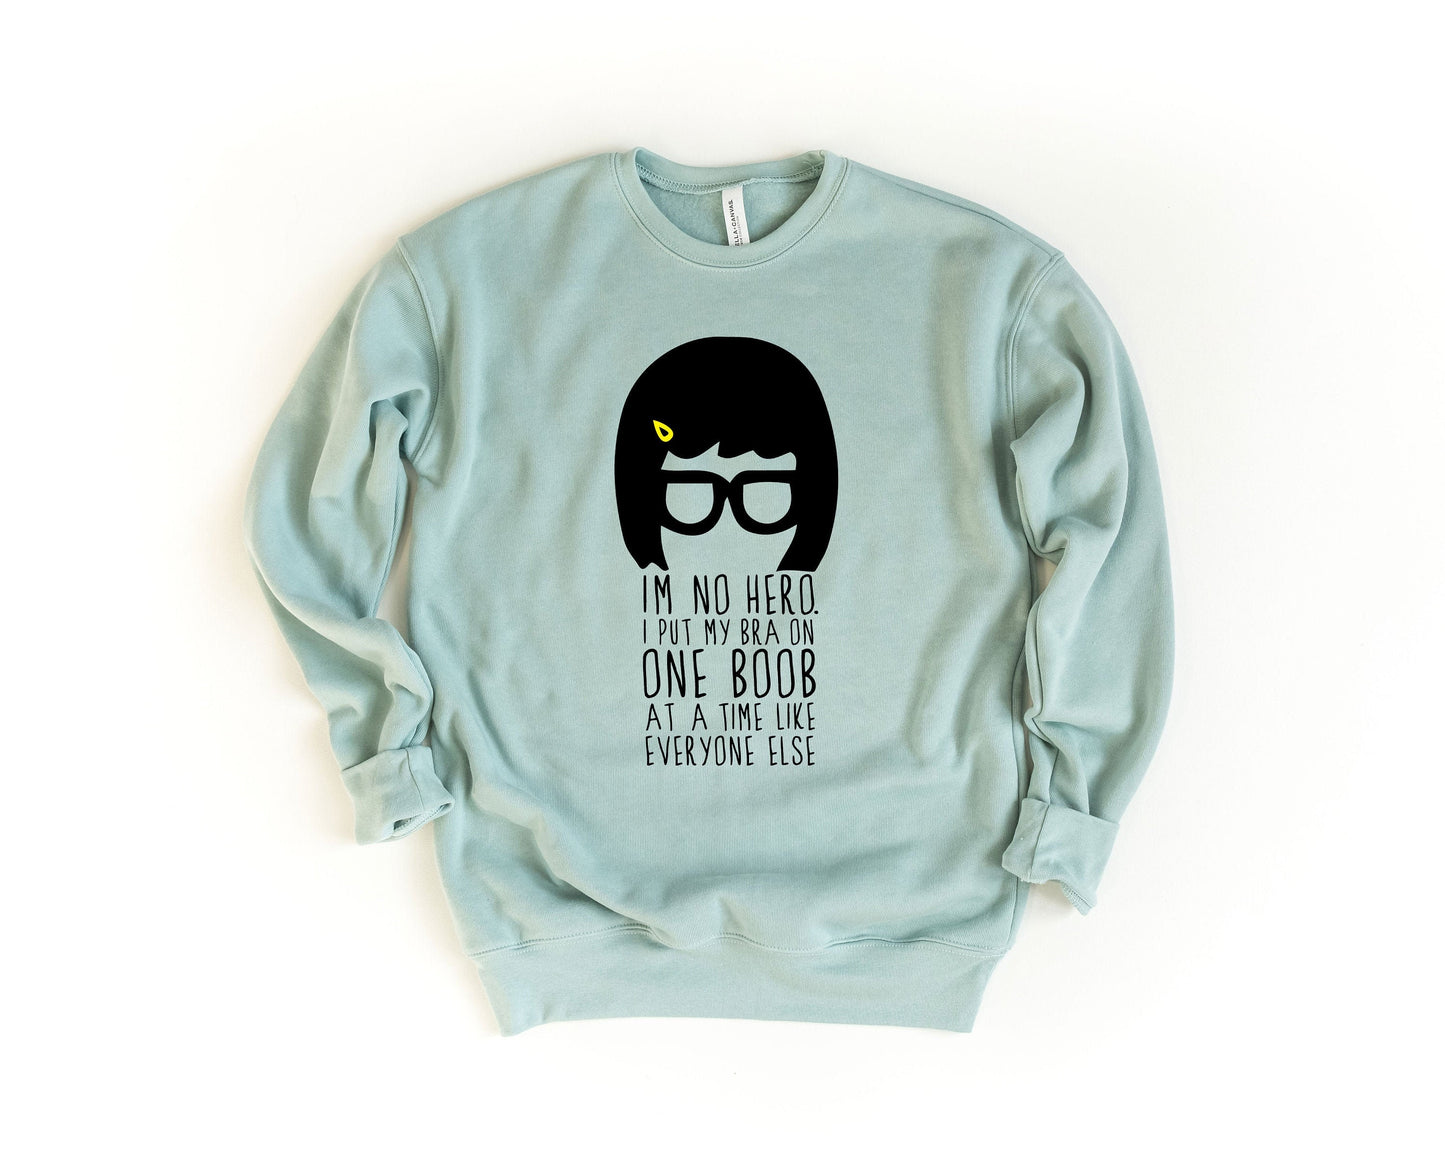 Tina Belcher - Bobs Burgers Fan - I'm No Hero Soft Sweatshirt- Unisex Adults - Funny Gift